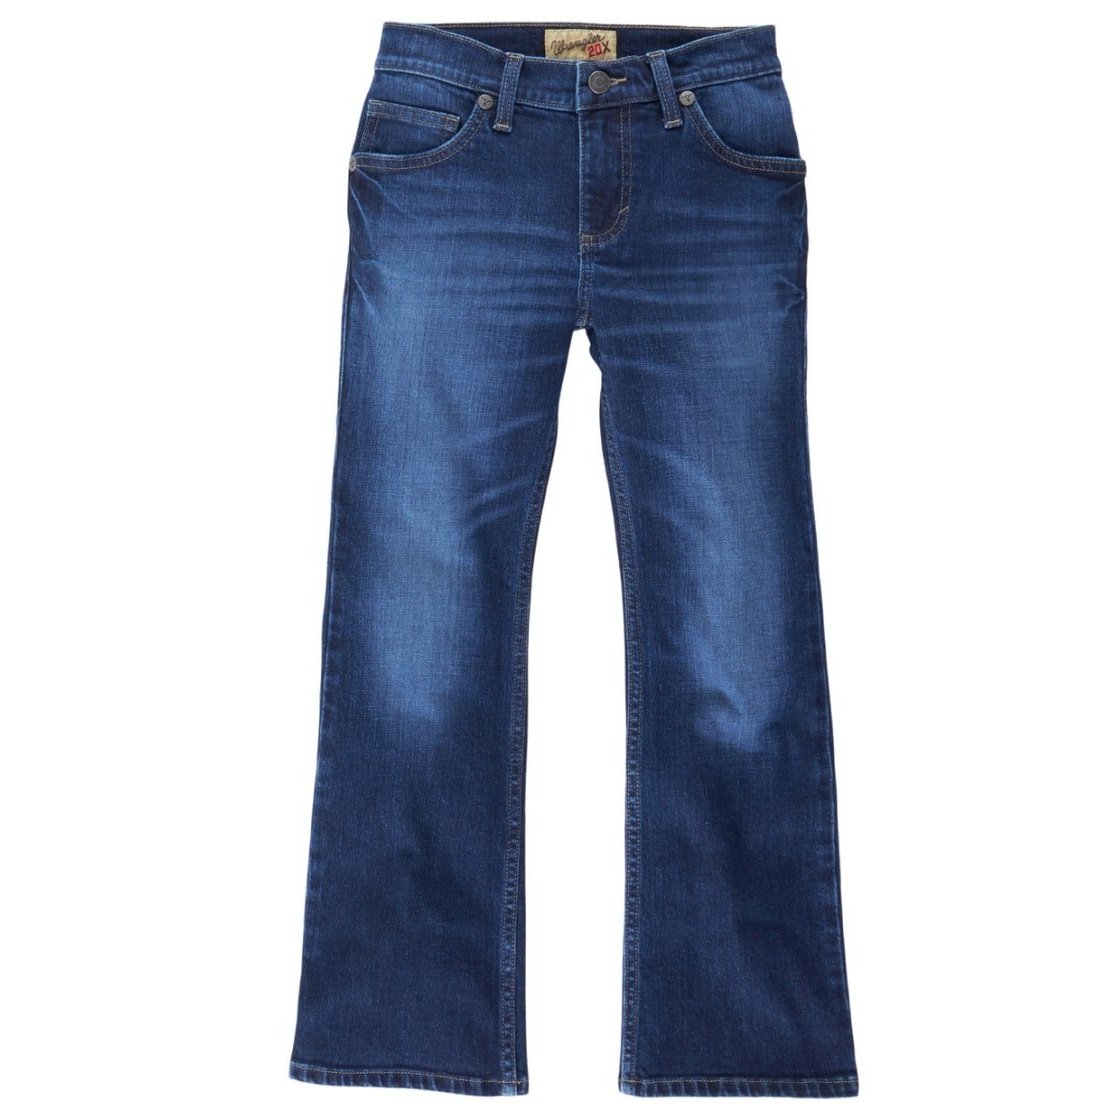 Wrangler Boy’s Jeans Vintage Bootcut 112325801 - Wrangler